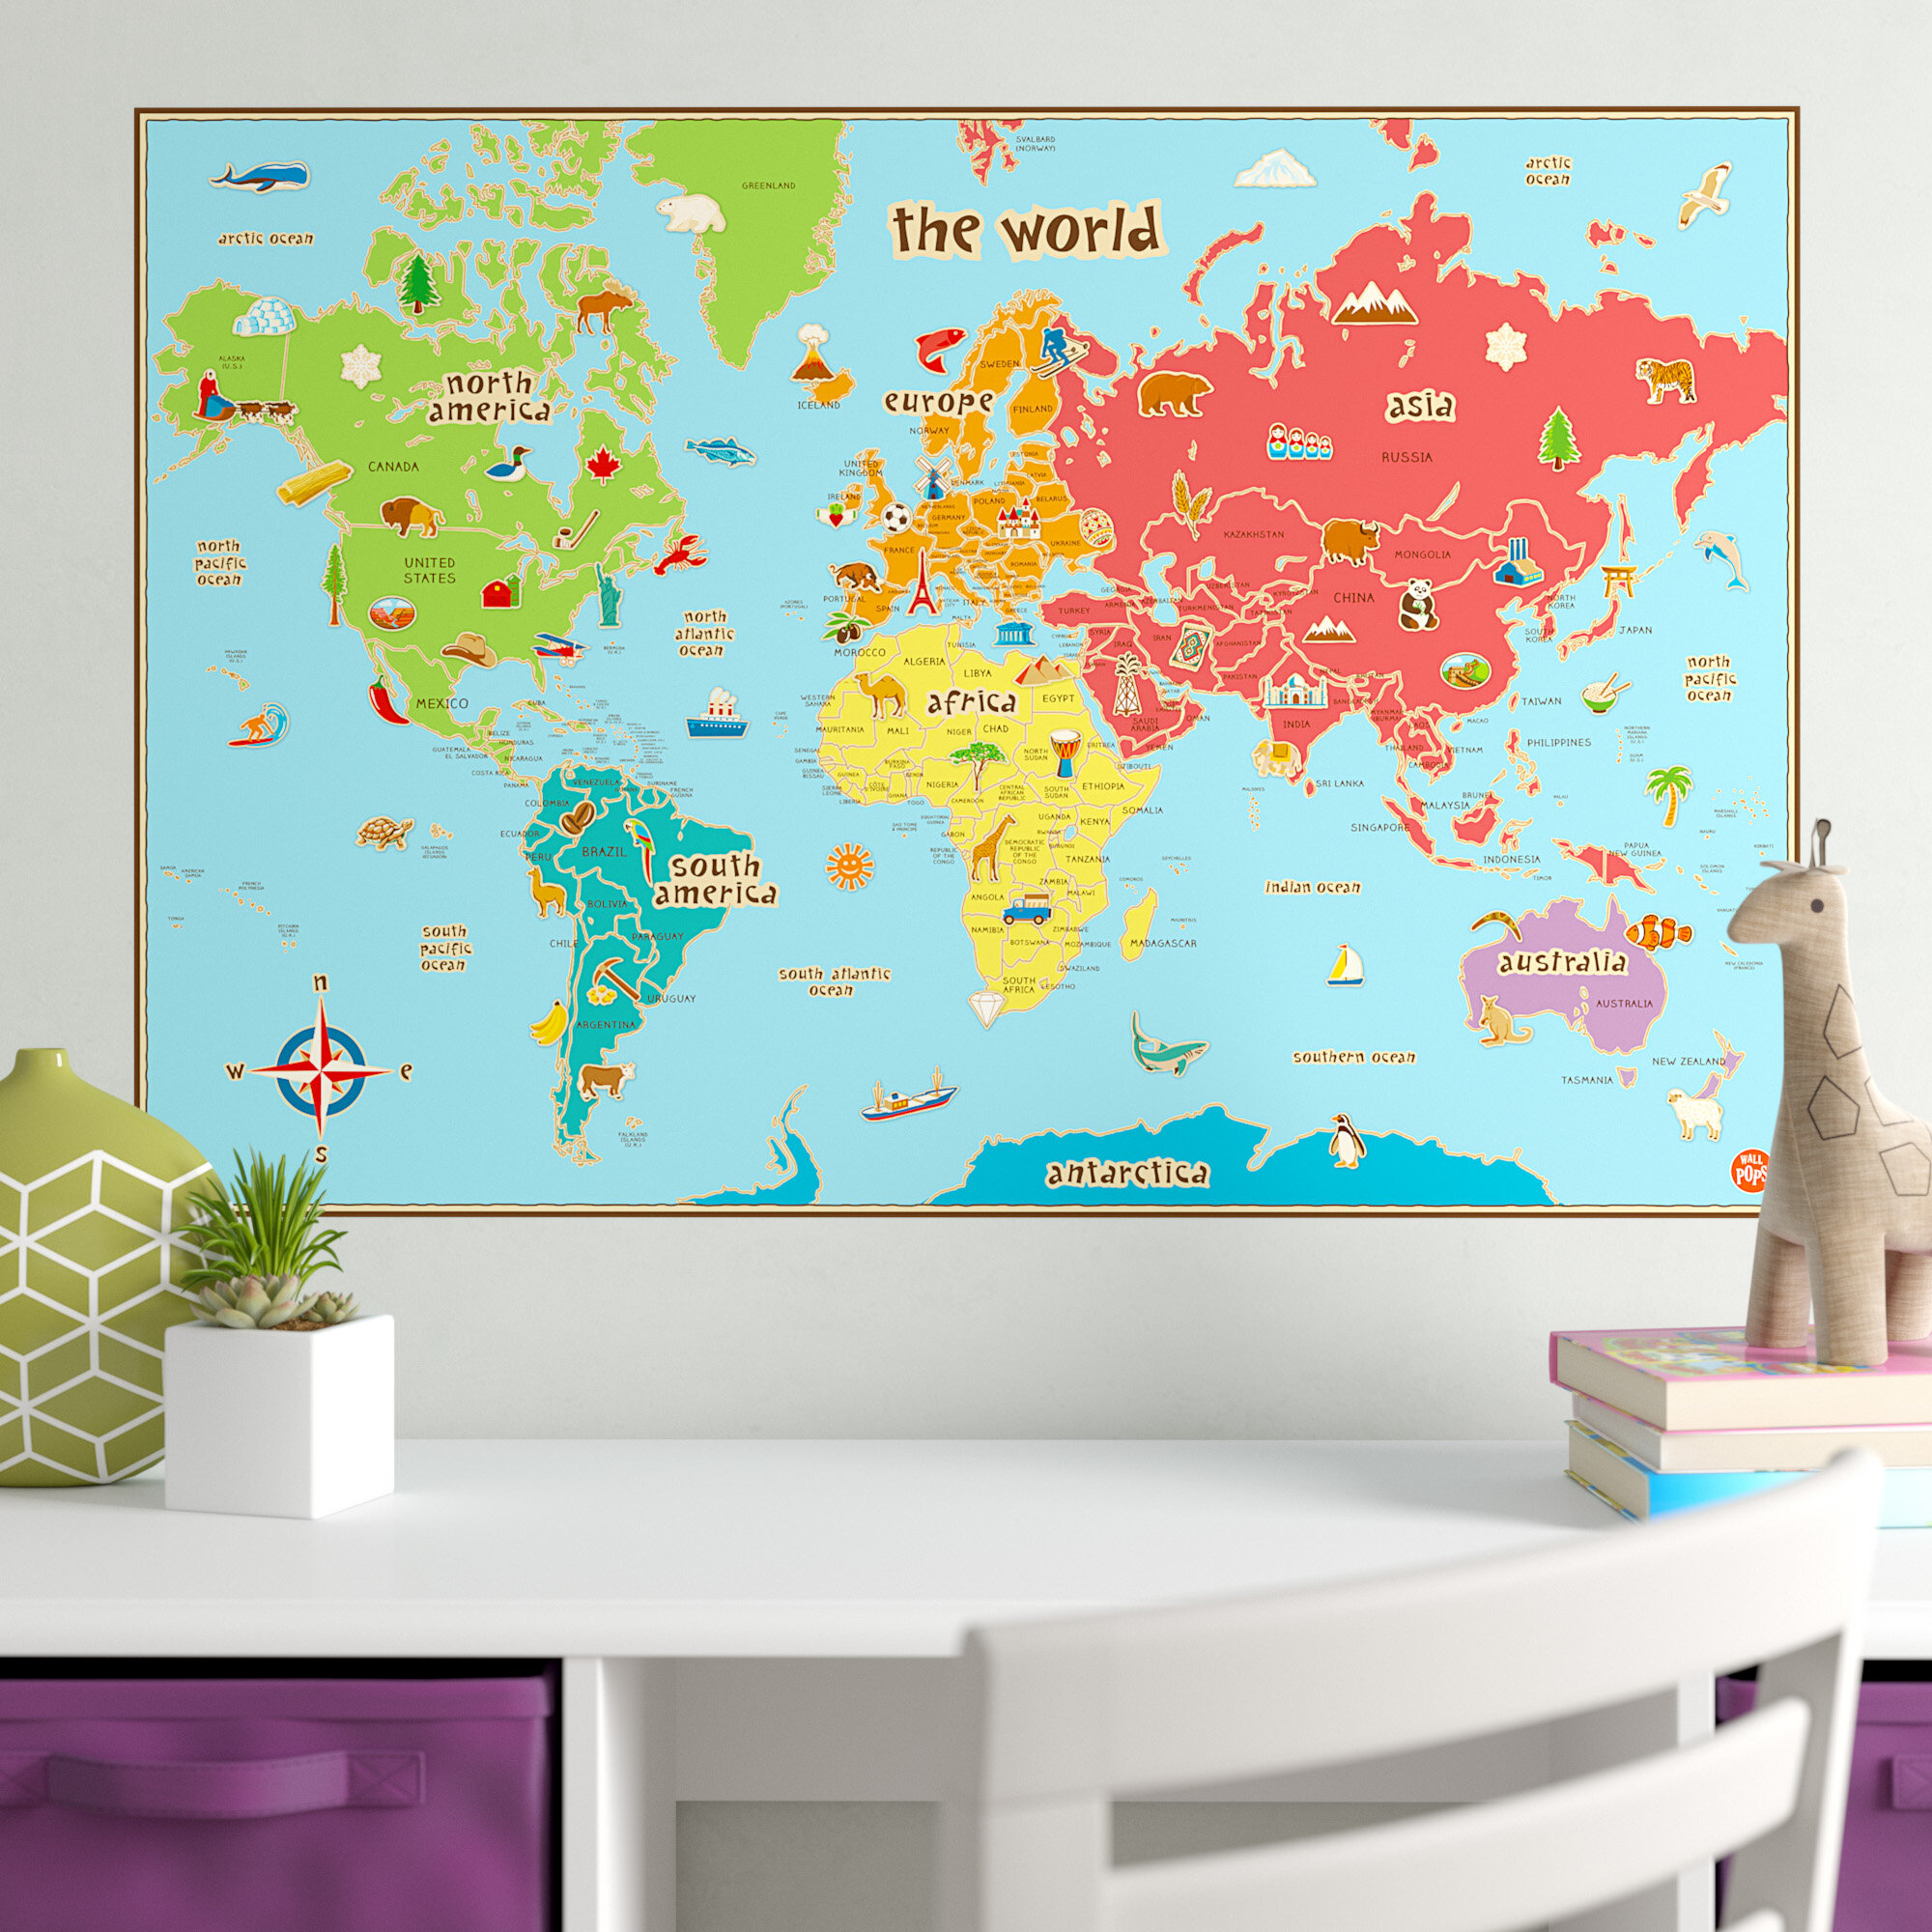 Removable World Map Words Mural Vinyl Wall Decals Sticker Living Room Decor Art